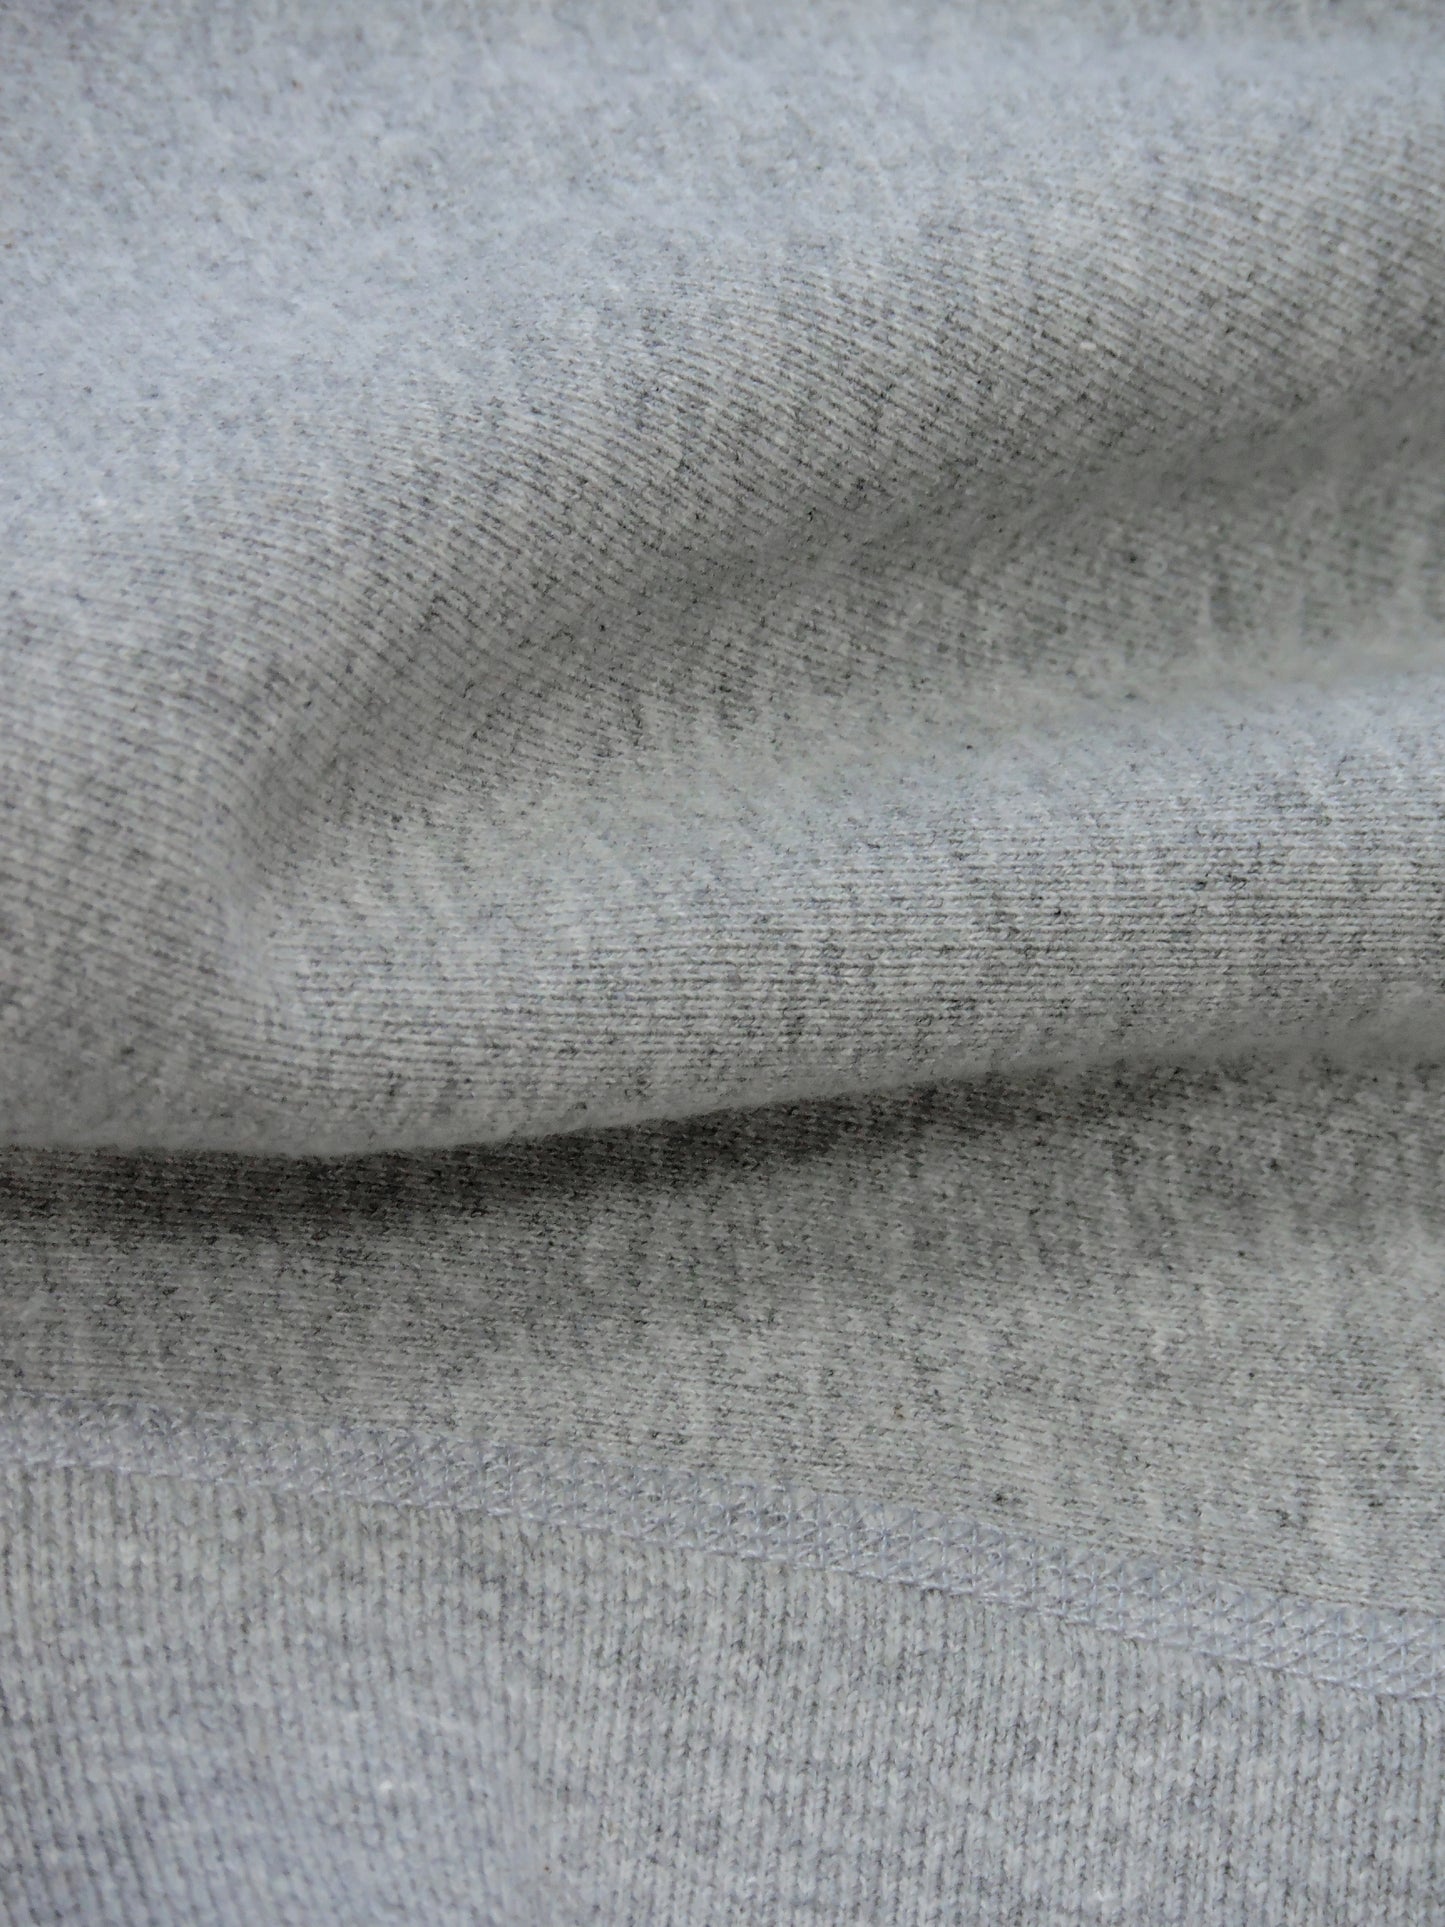 Close up of cotton fleece fabric